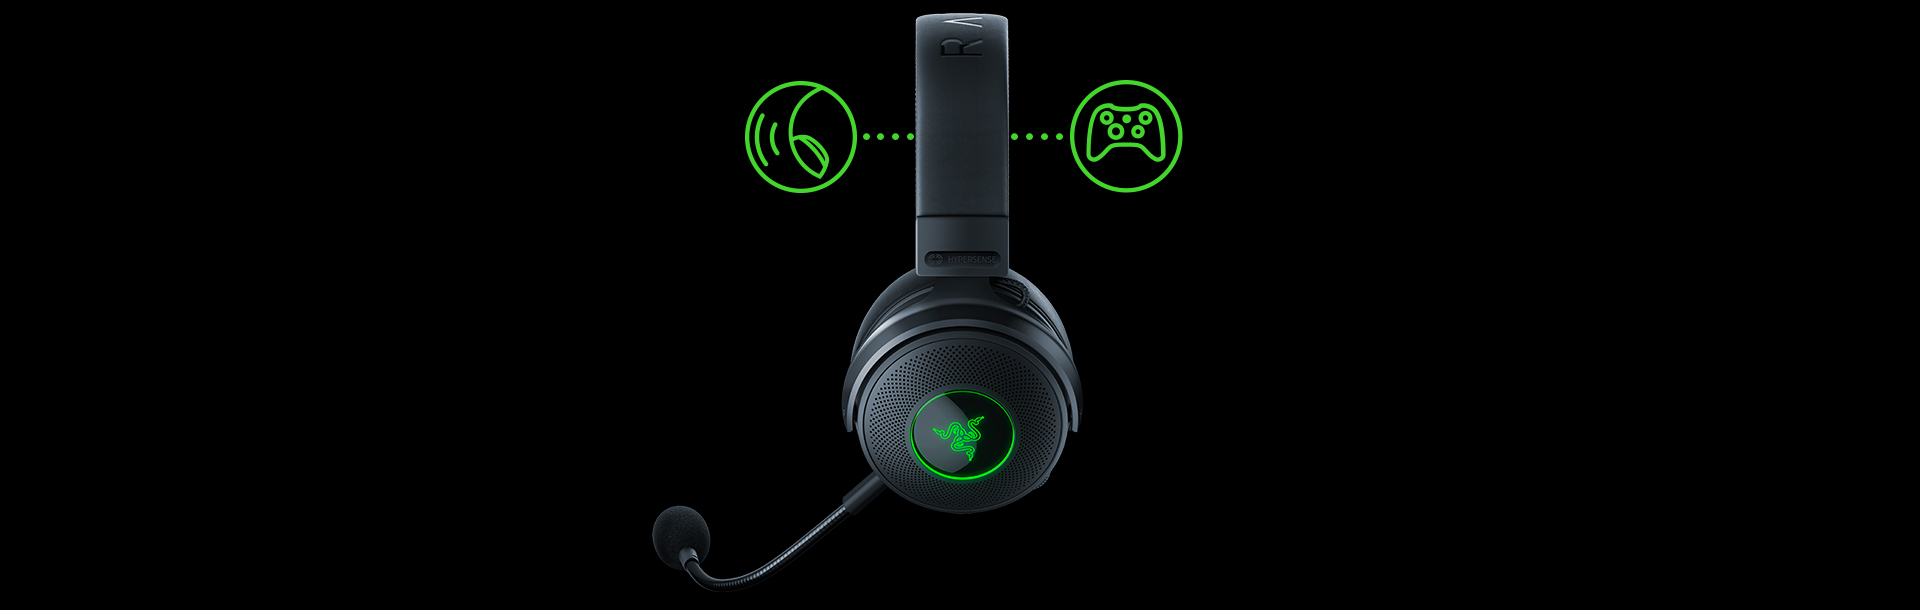 Razer Kraken V3 Pro,Headset,หูฟังไร้สาย,หูฟังเสียงดี,headphones,หูฟังบลูทูธ,หูฟังครอบหู,หูฟังเกมมิ่ง